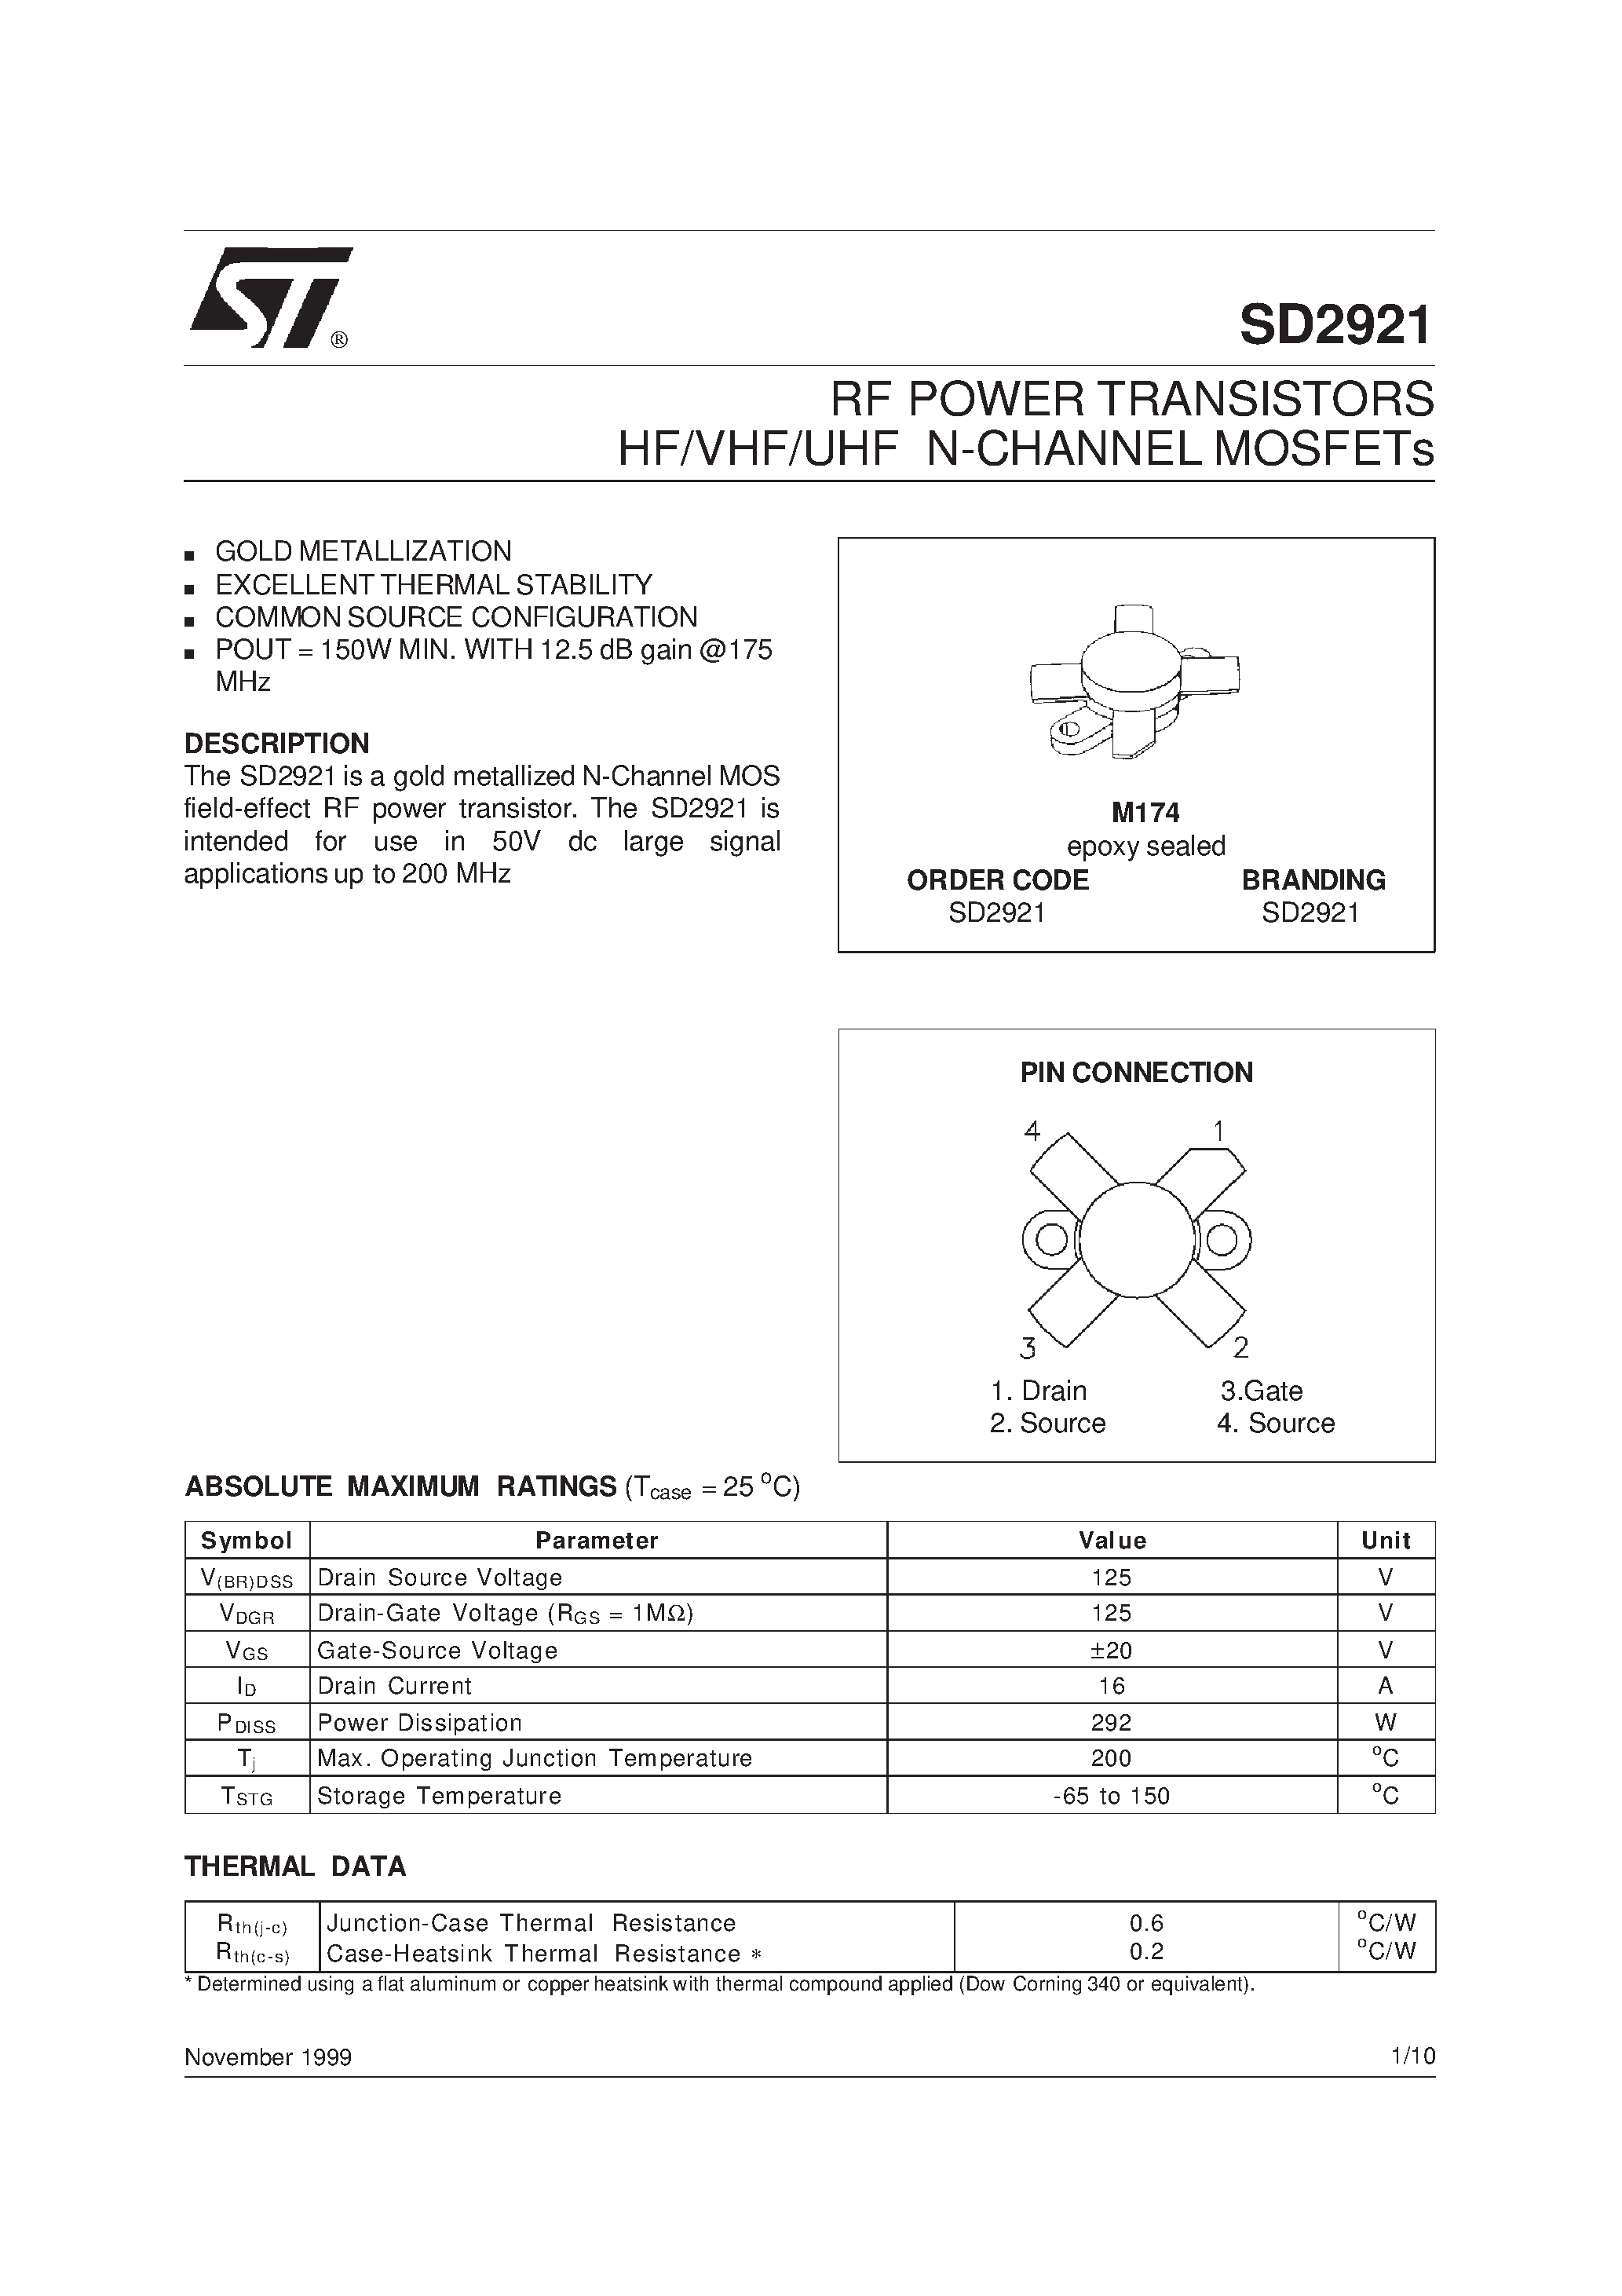 Datasheet SD2921 - RF POWER TRANSISTORS HF/VHF/UHF N-CHANNEL MOSFETs page 1